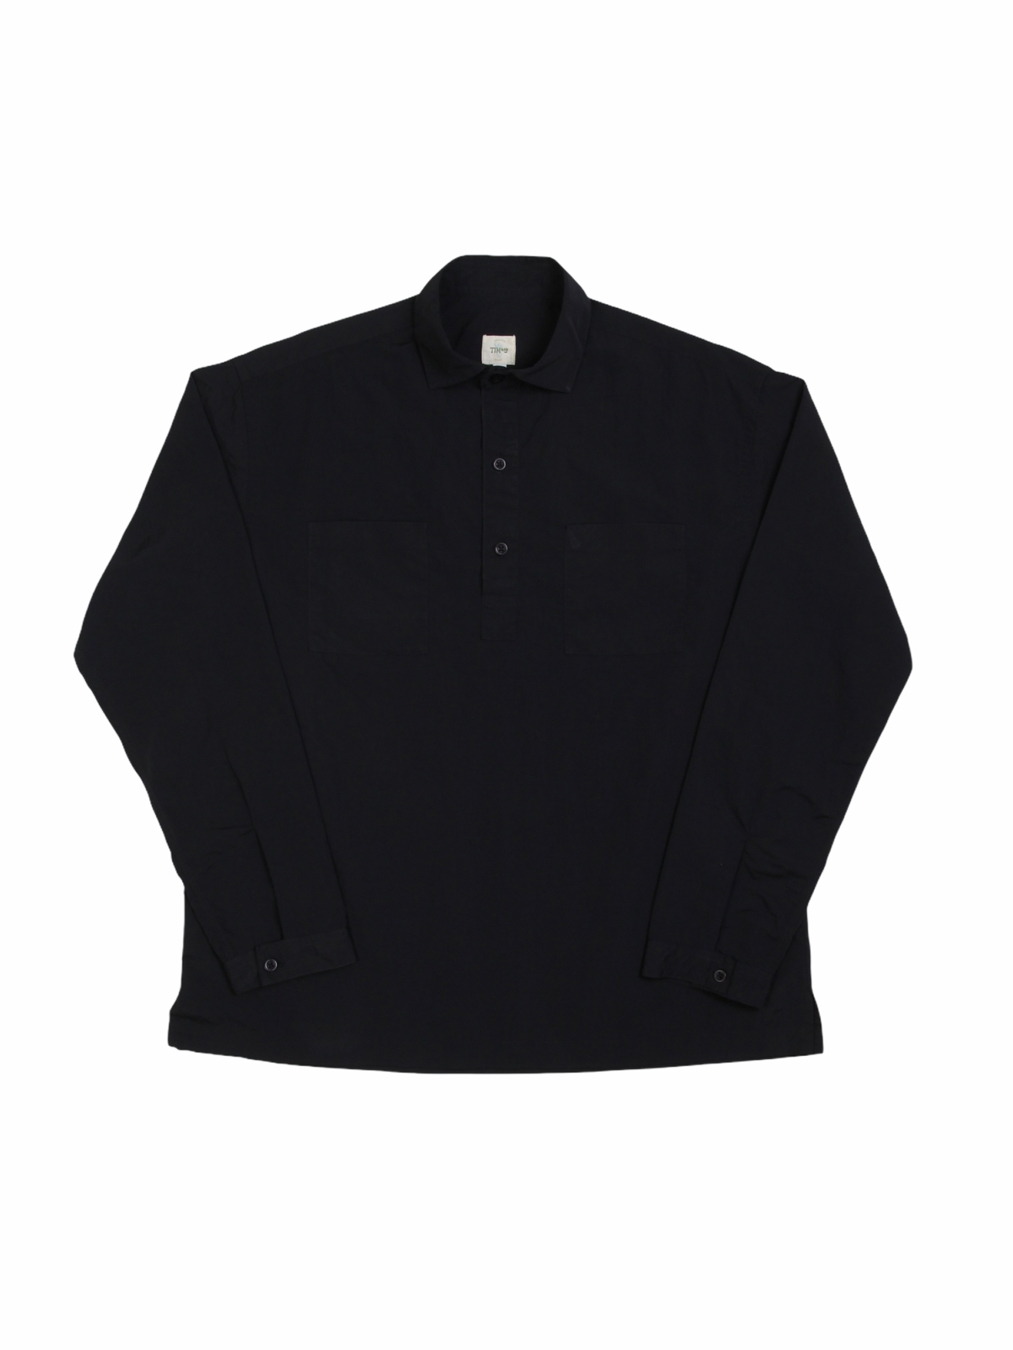 Nylon Pullover Shirts (Black)